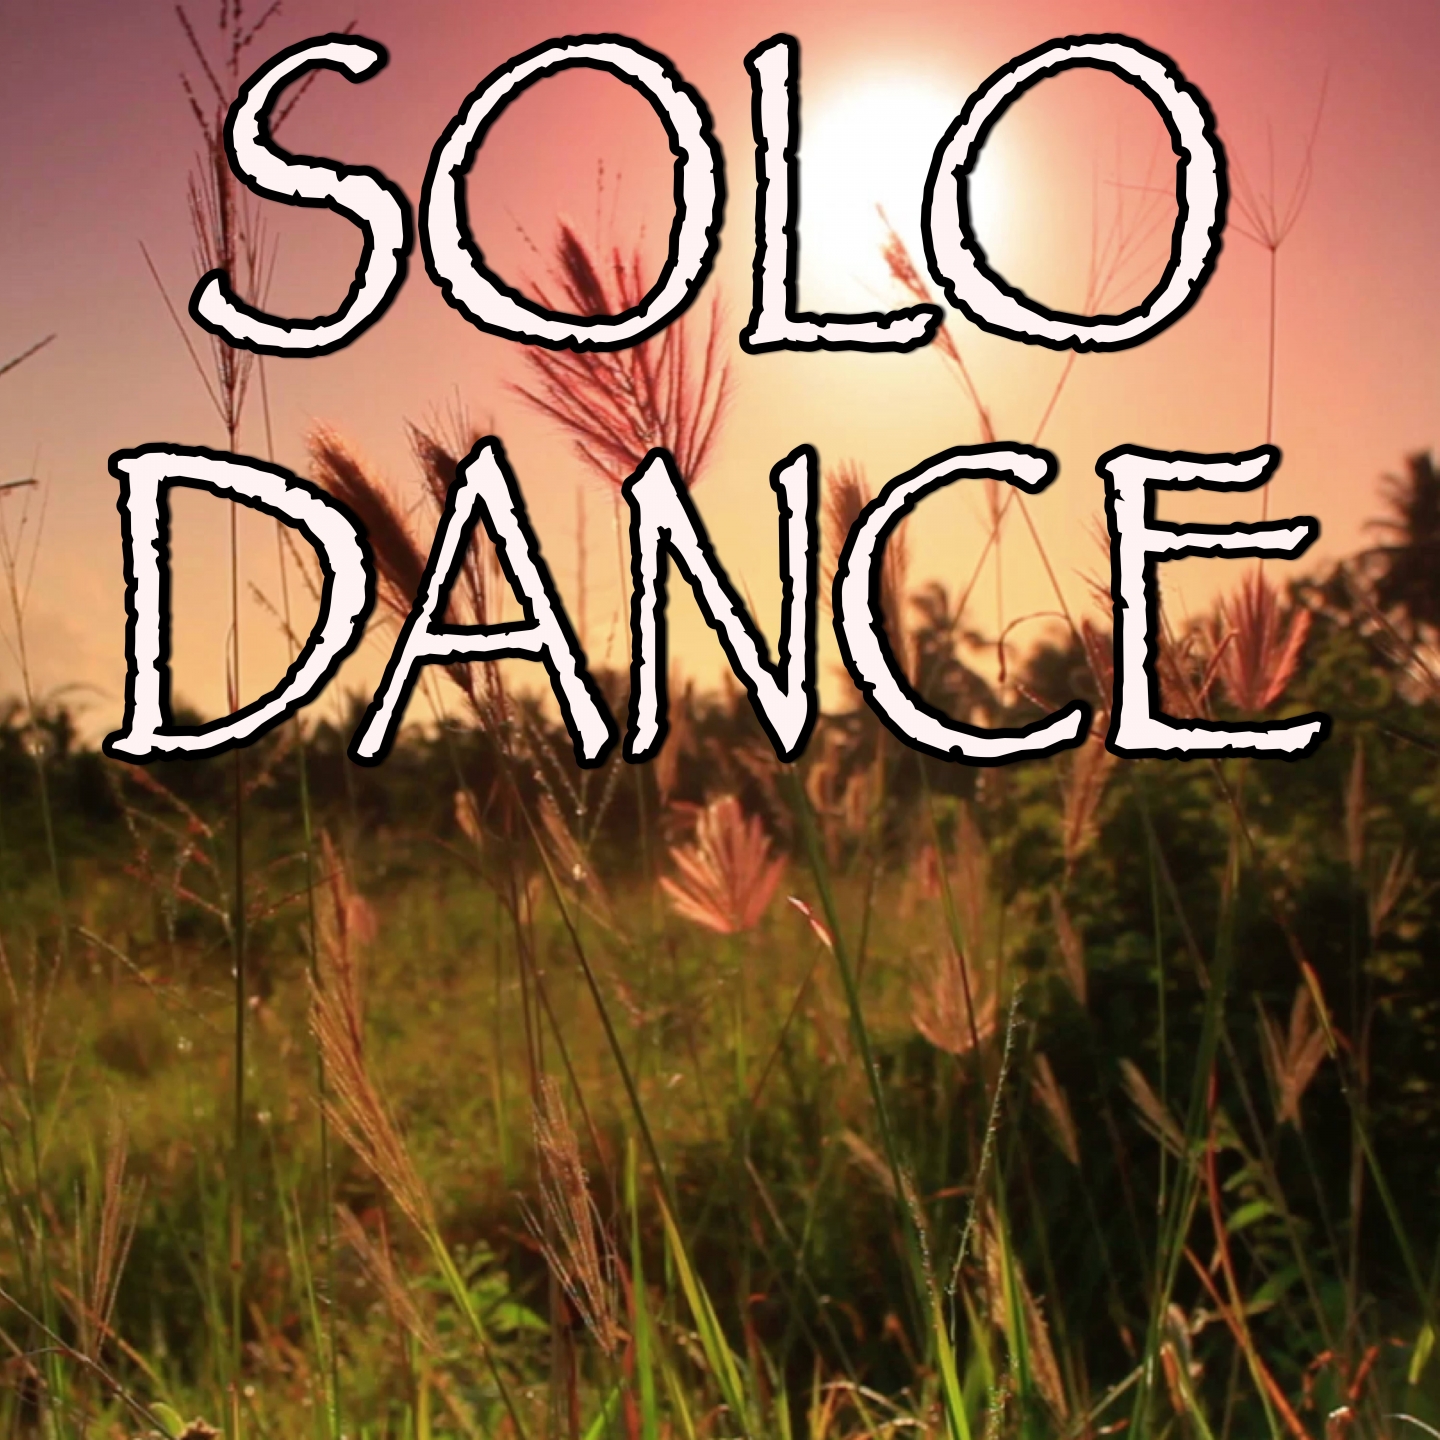 Solo Dance - Tribute to Martin Jensen (Instrumental Version)